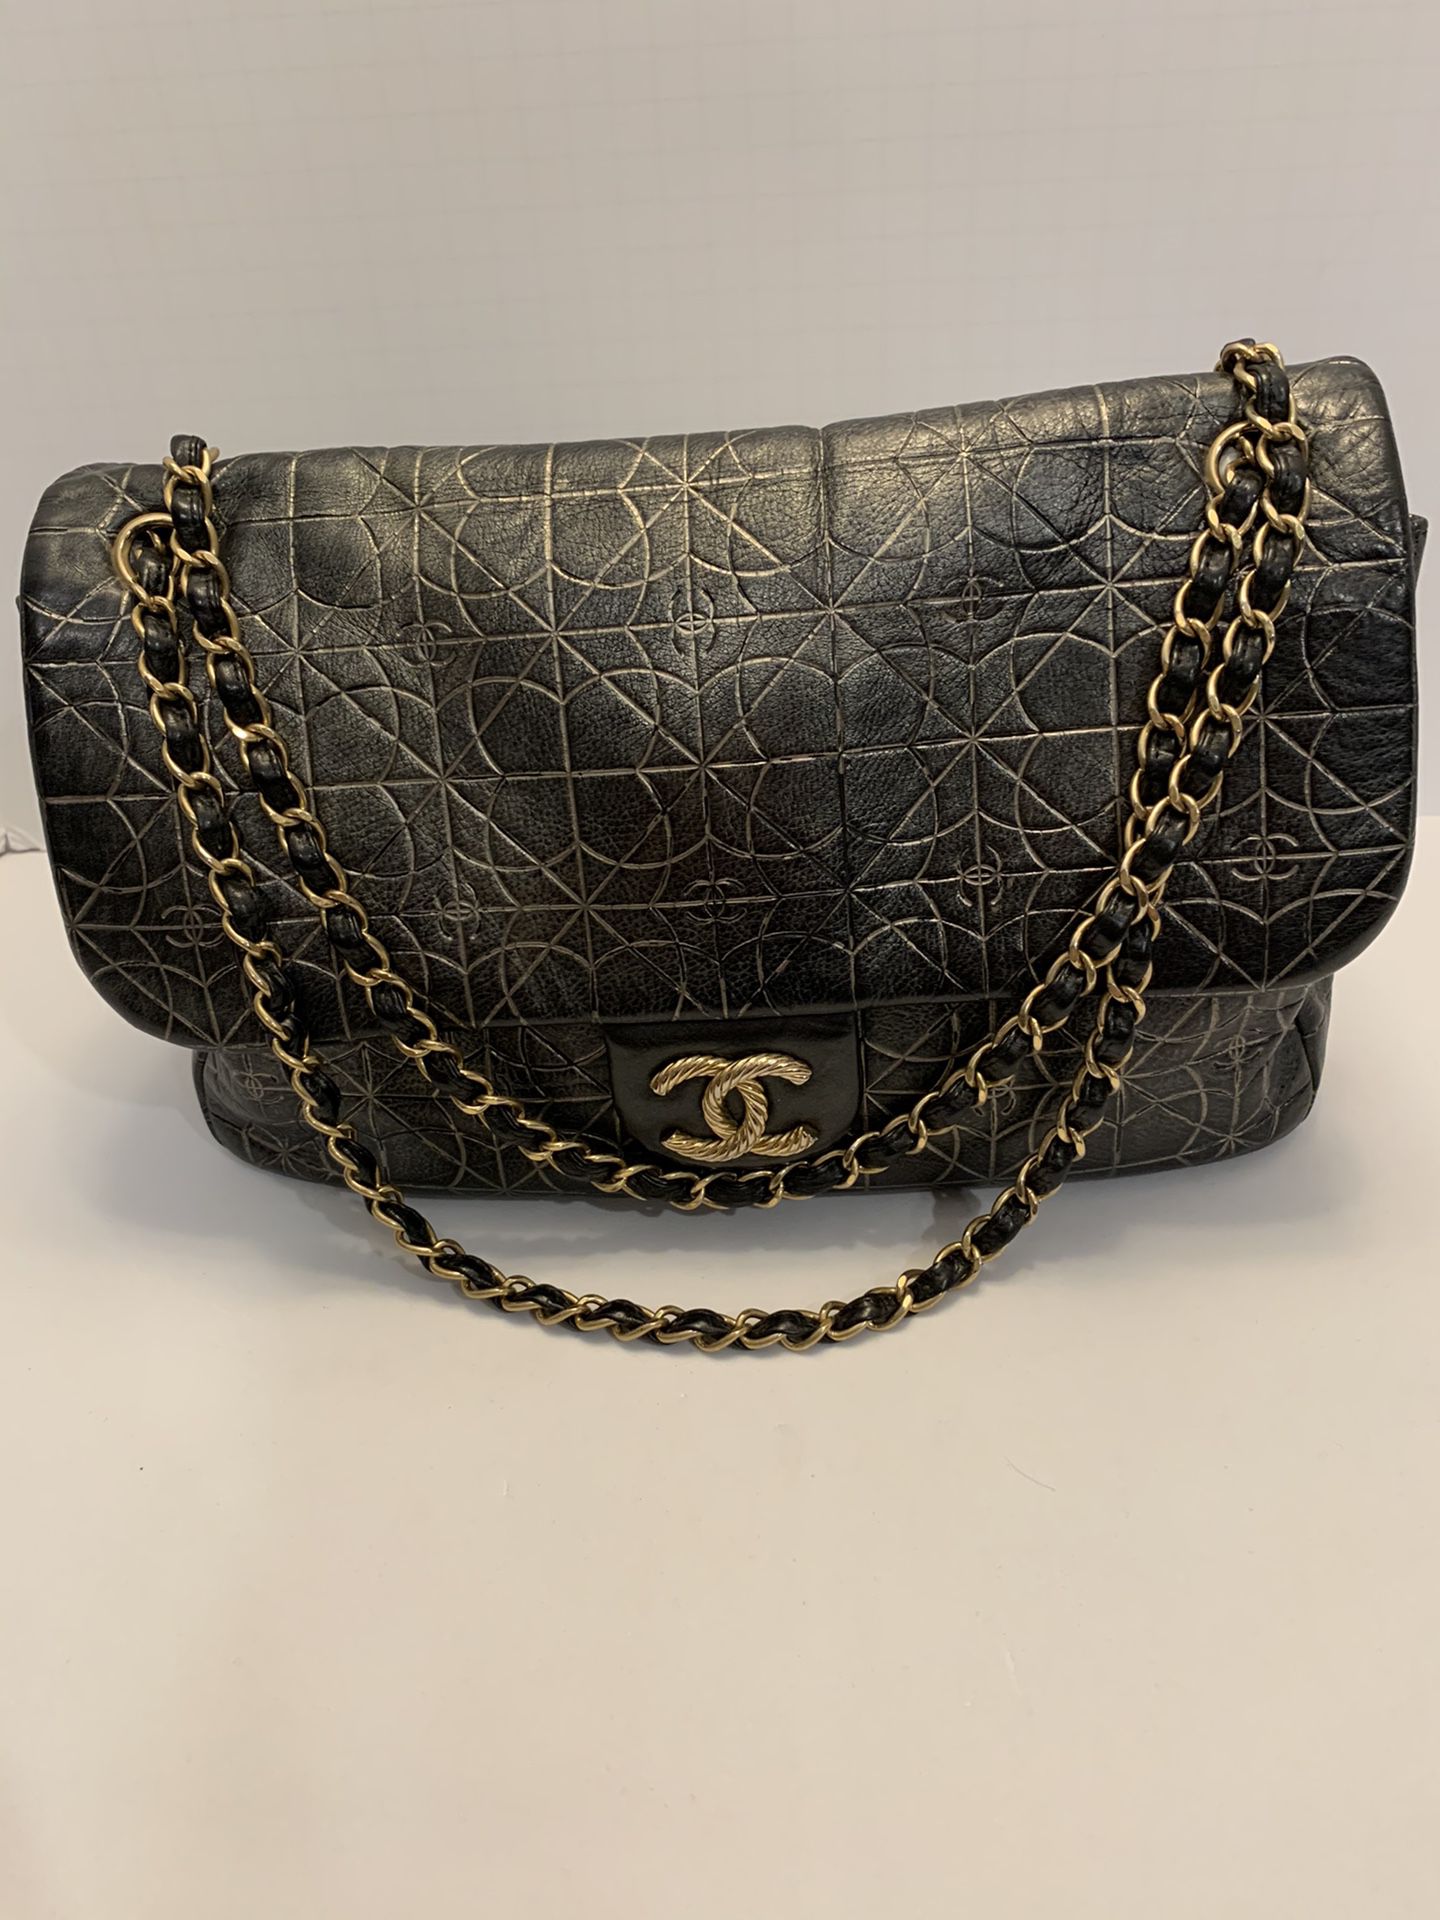 Authentic Chanel calfskin metallic black gold flap shoulder bag